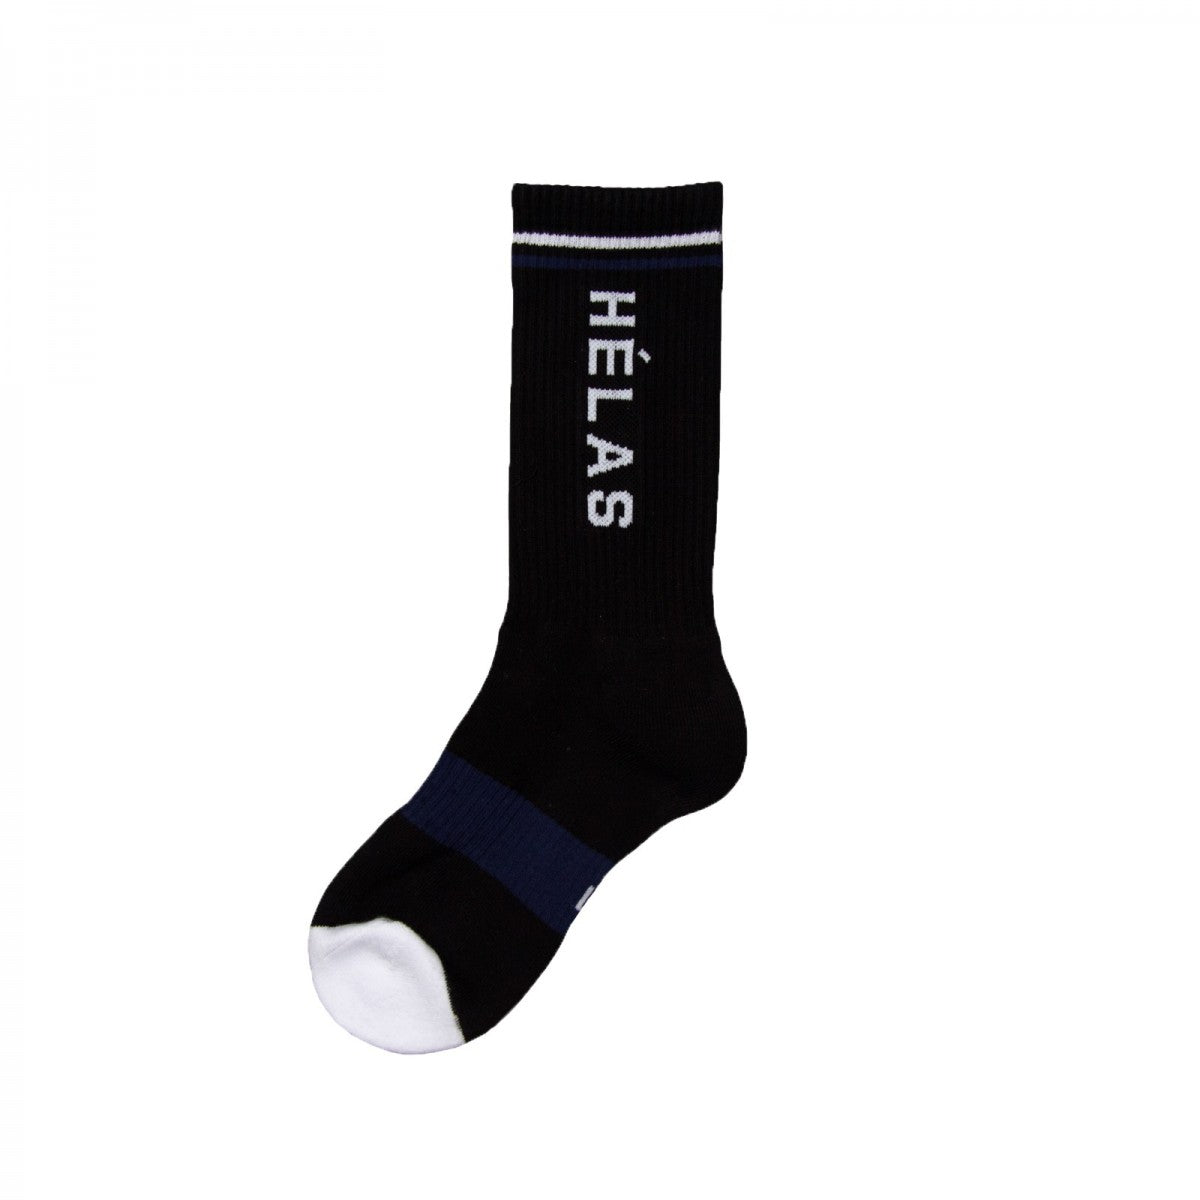 Helas Sox Socks Black